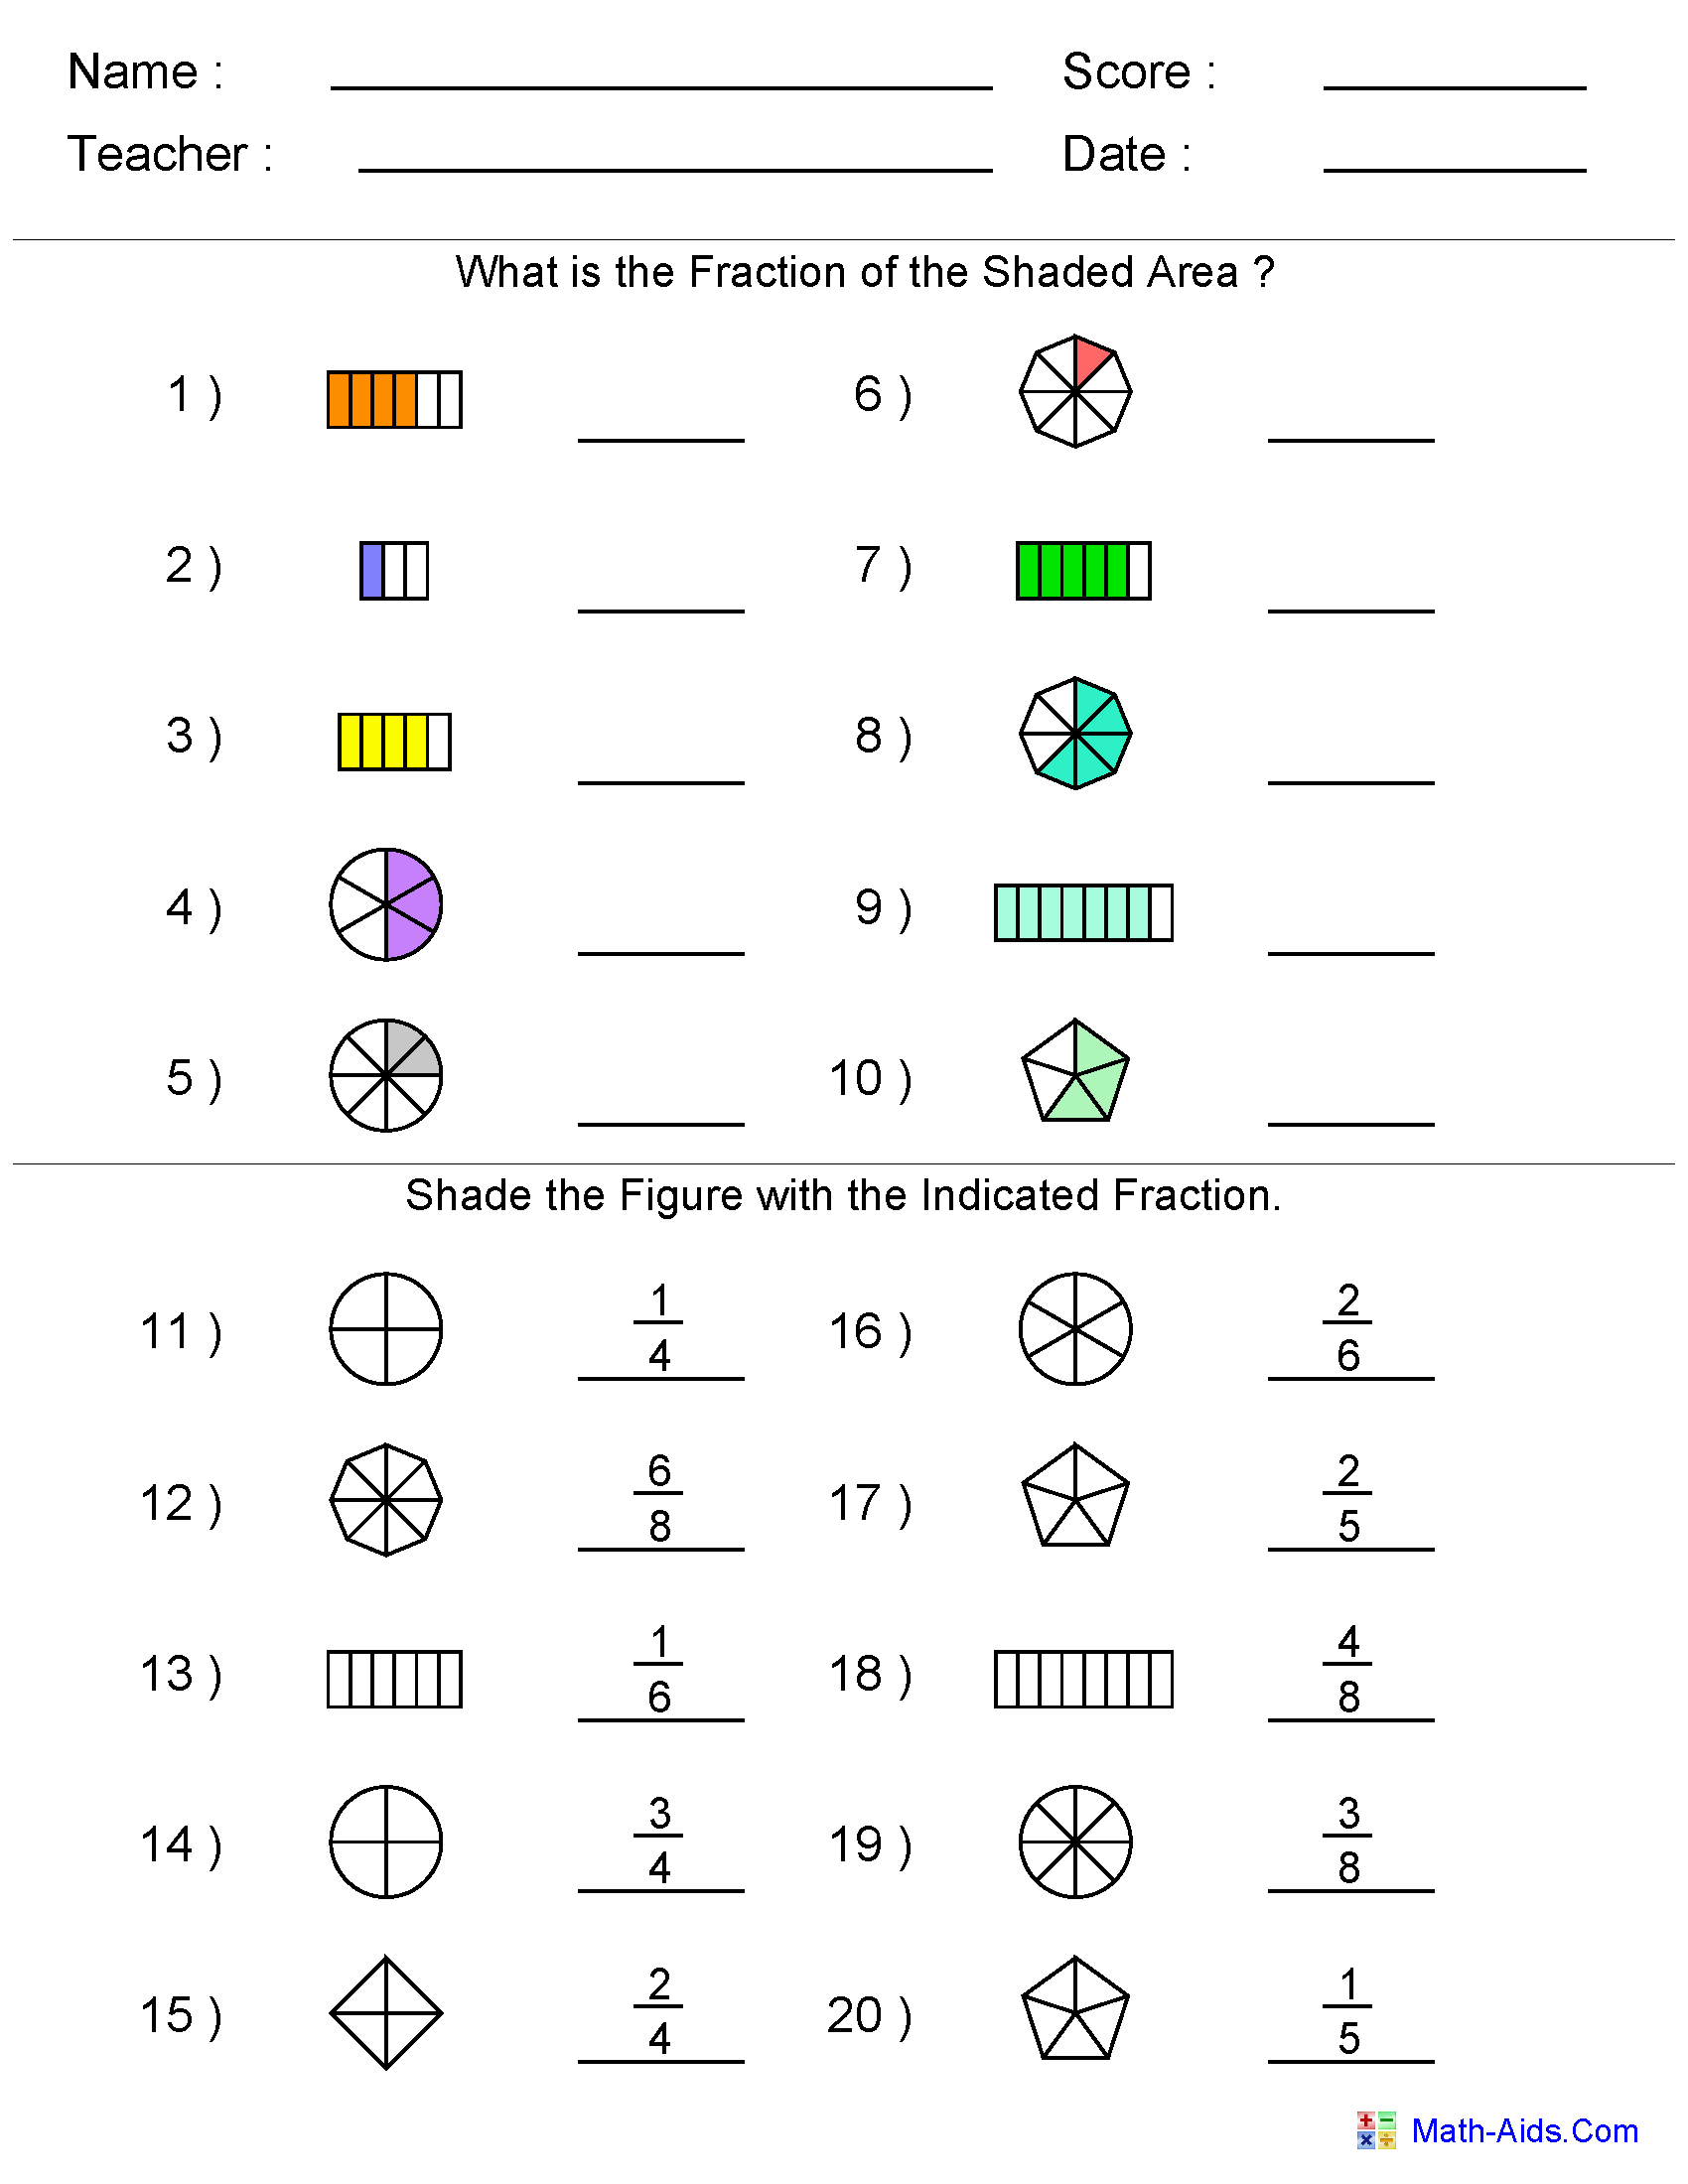 free-printable-fraction-worksheets-ks2-lexia-s-blog